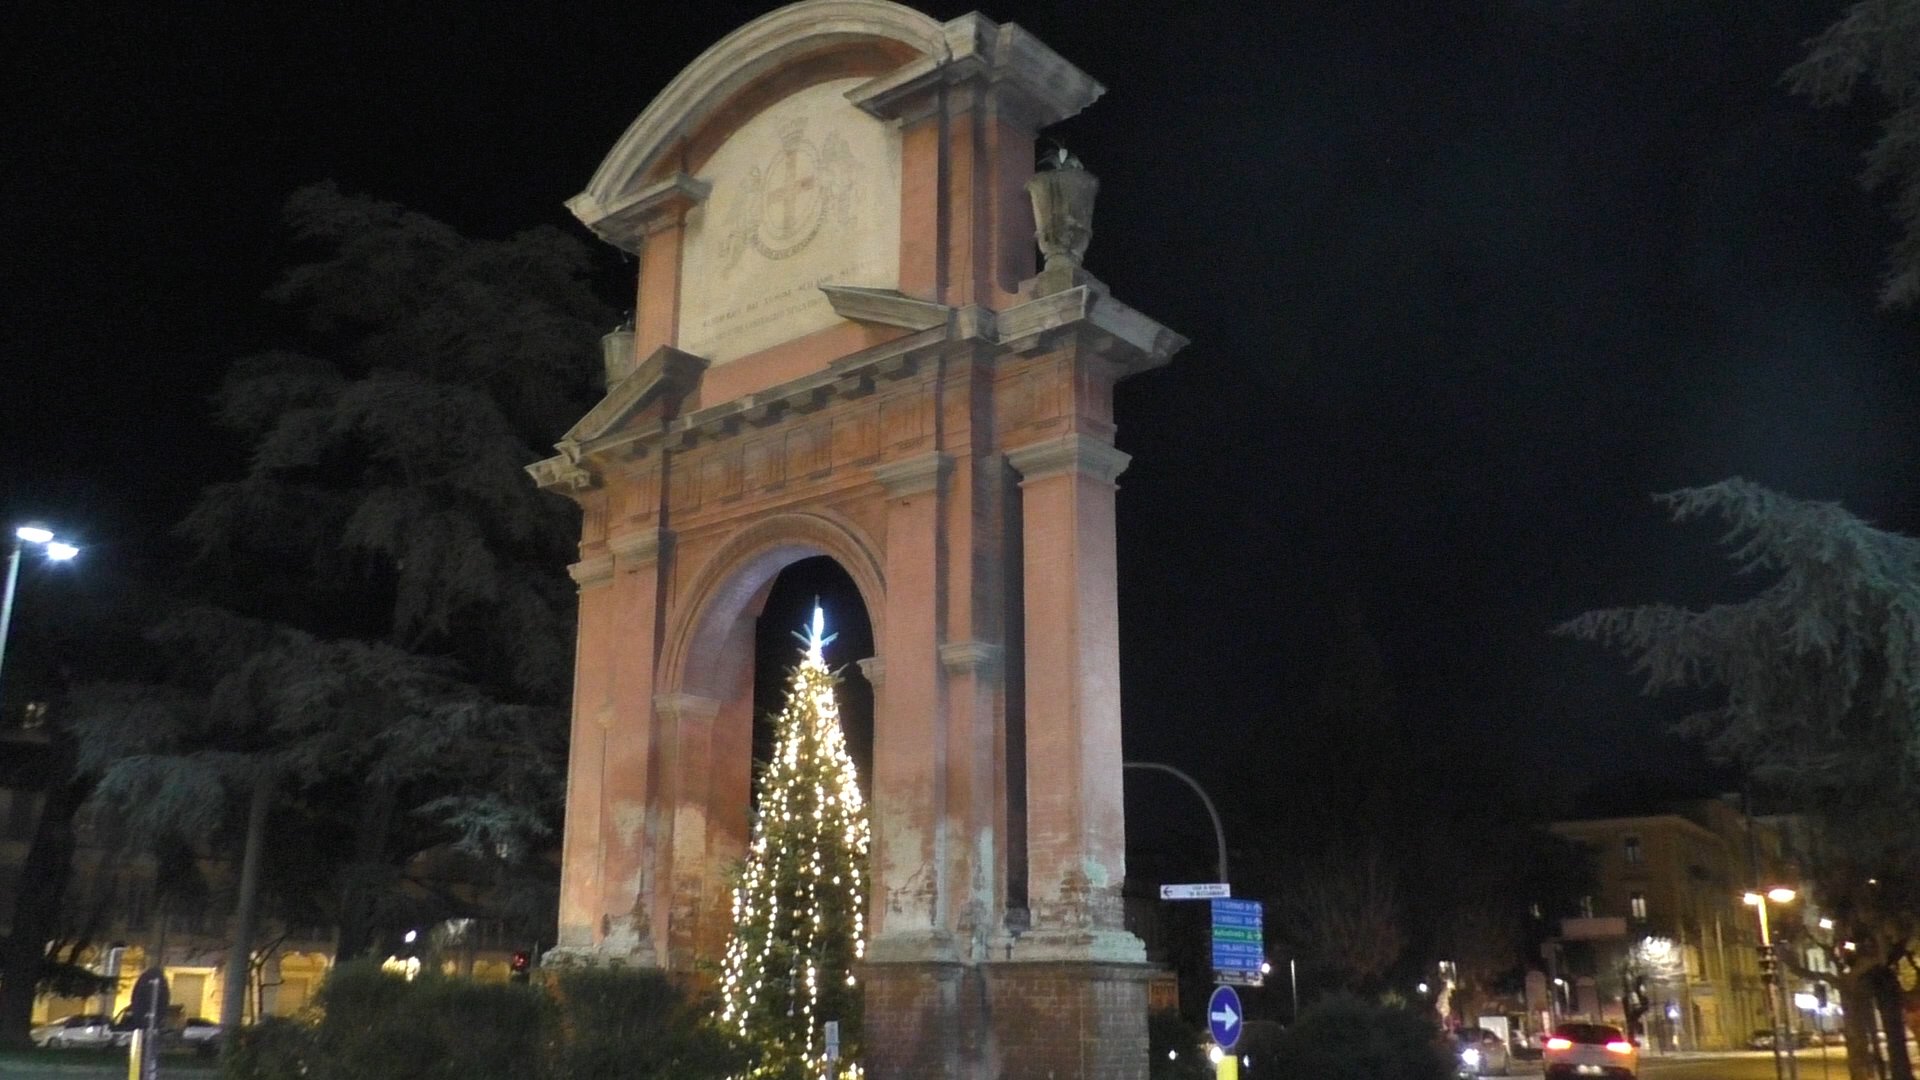 Cuttica: “Arco in piazza Matteotti da restaurare. Spero entro 12 mesi”